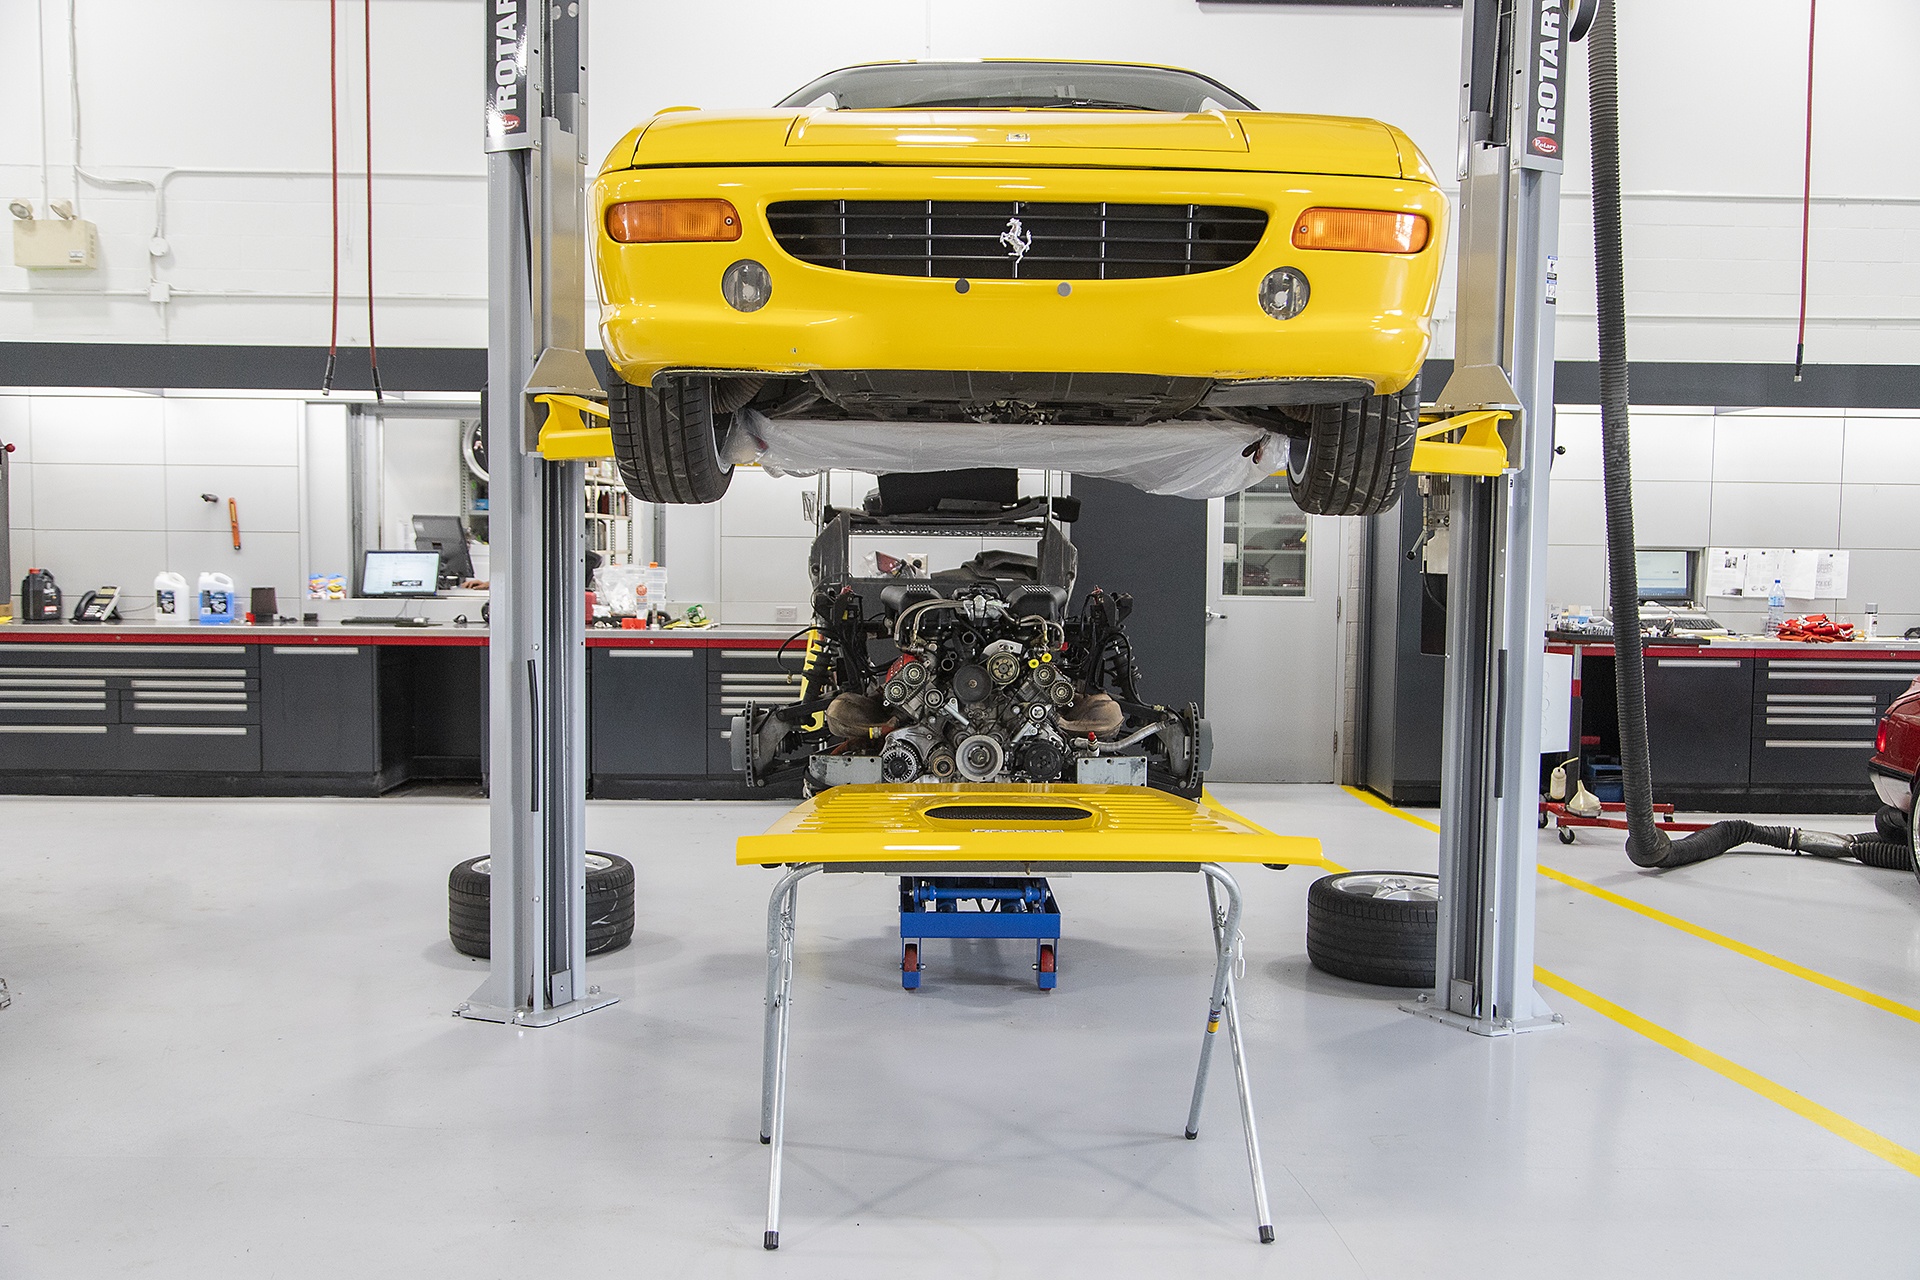 Yellow Ferrari sports car in garage being repaired